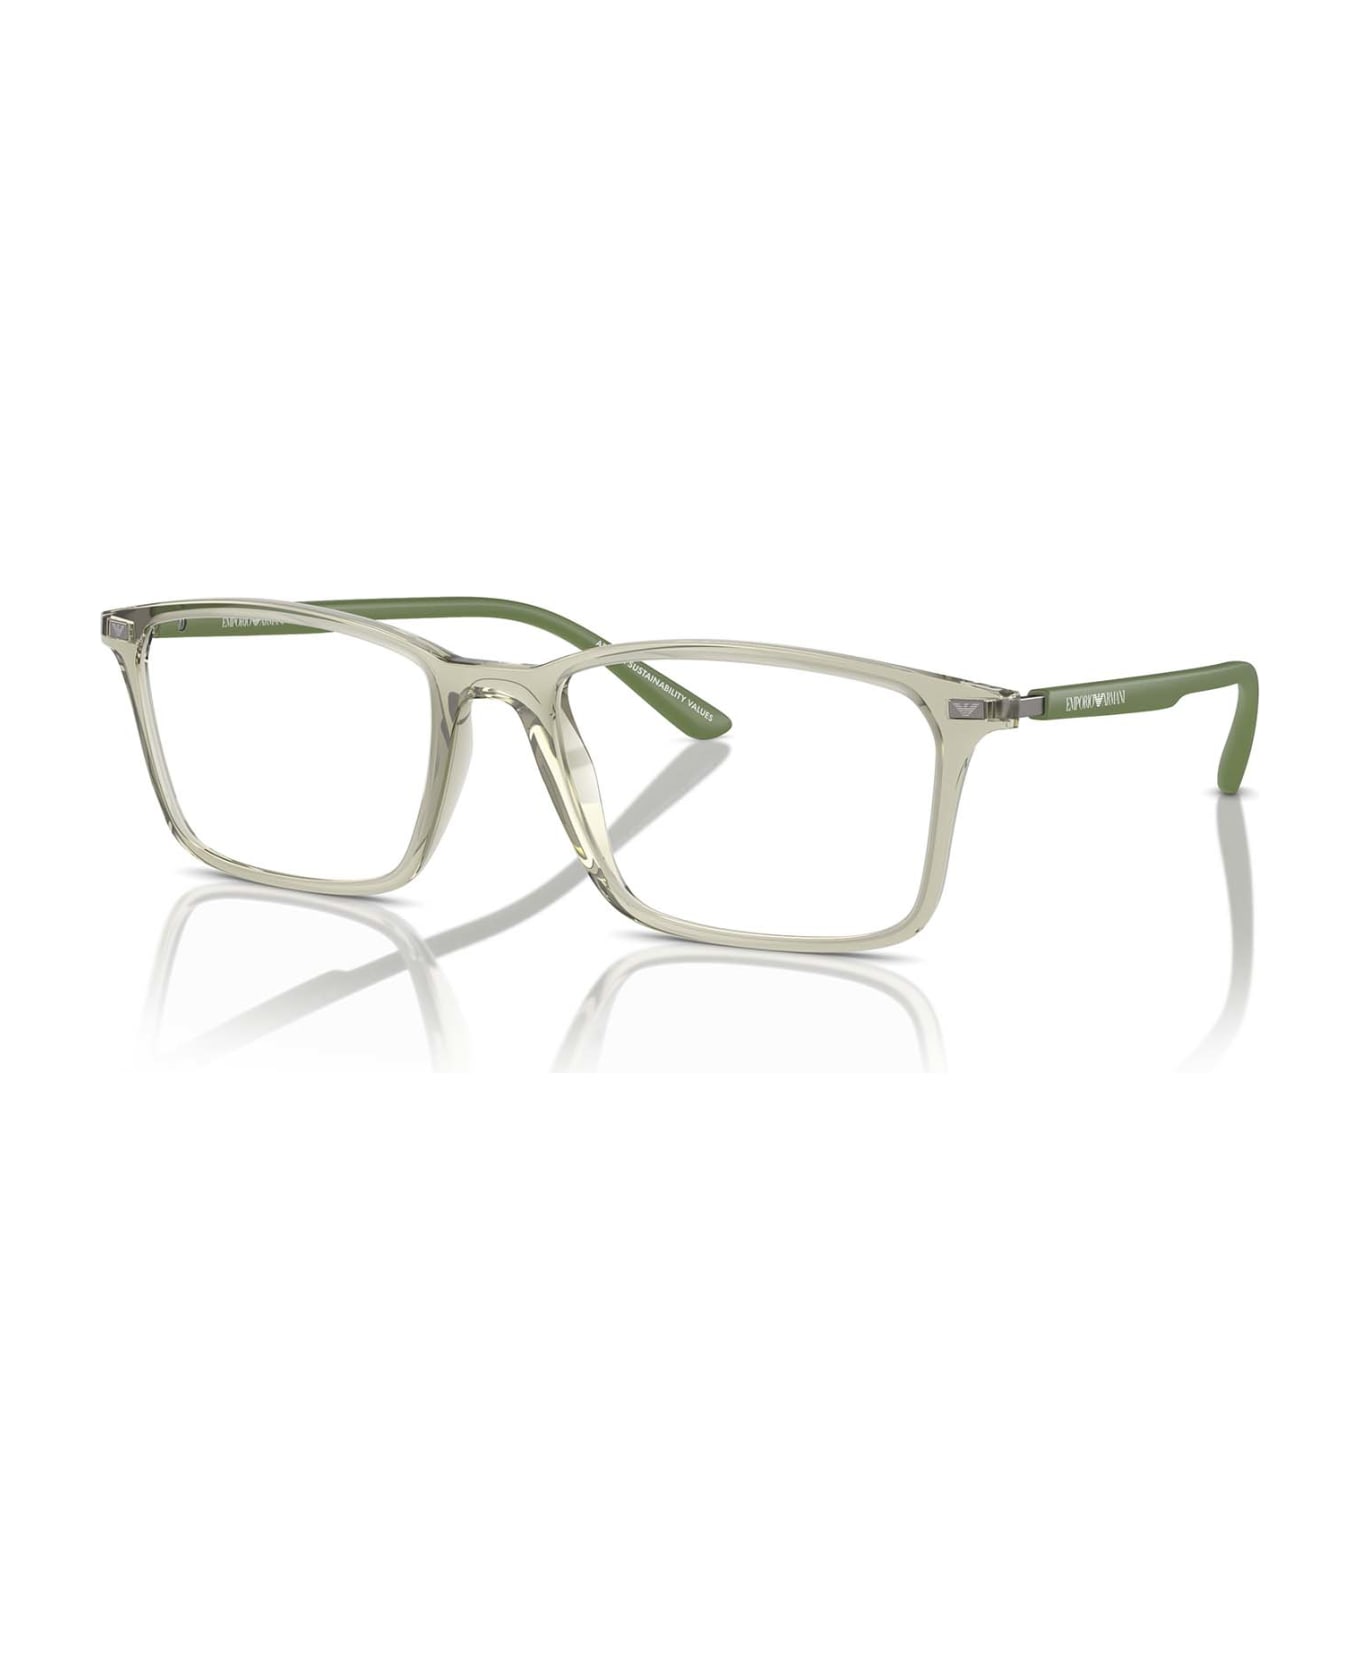 Emporio Armani Ea3237 Shiny Transparent Green Glasses - Shiny Transparent Green